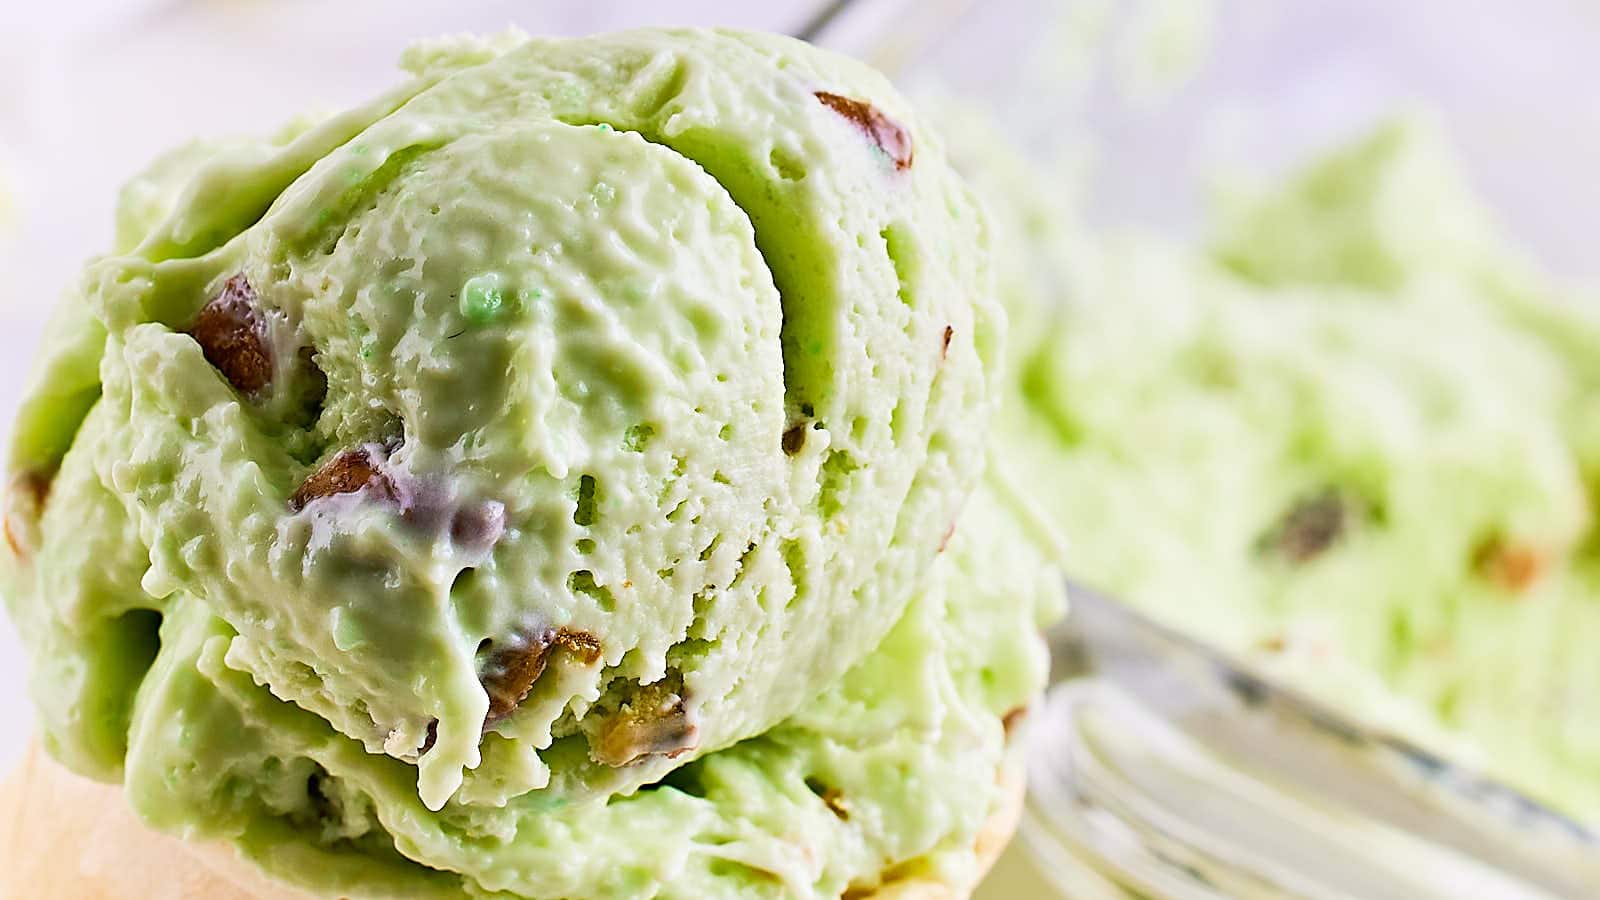 Homemade Pistachio Ice Cream recipe by Cheerful Cook.